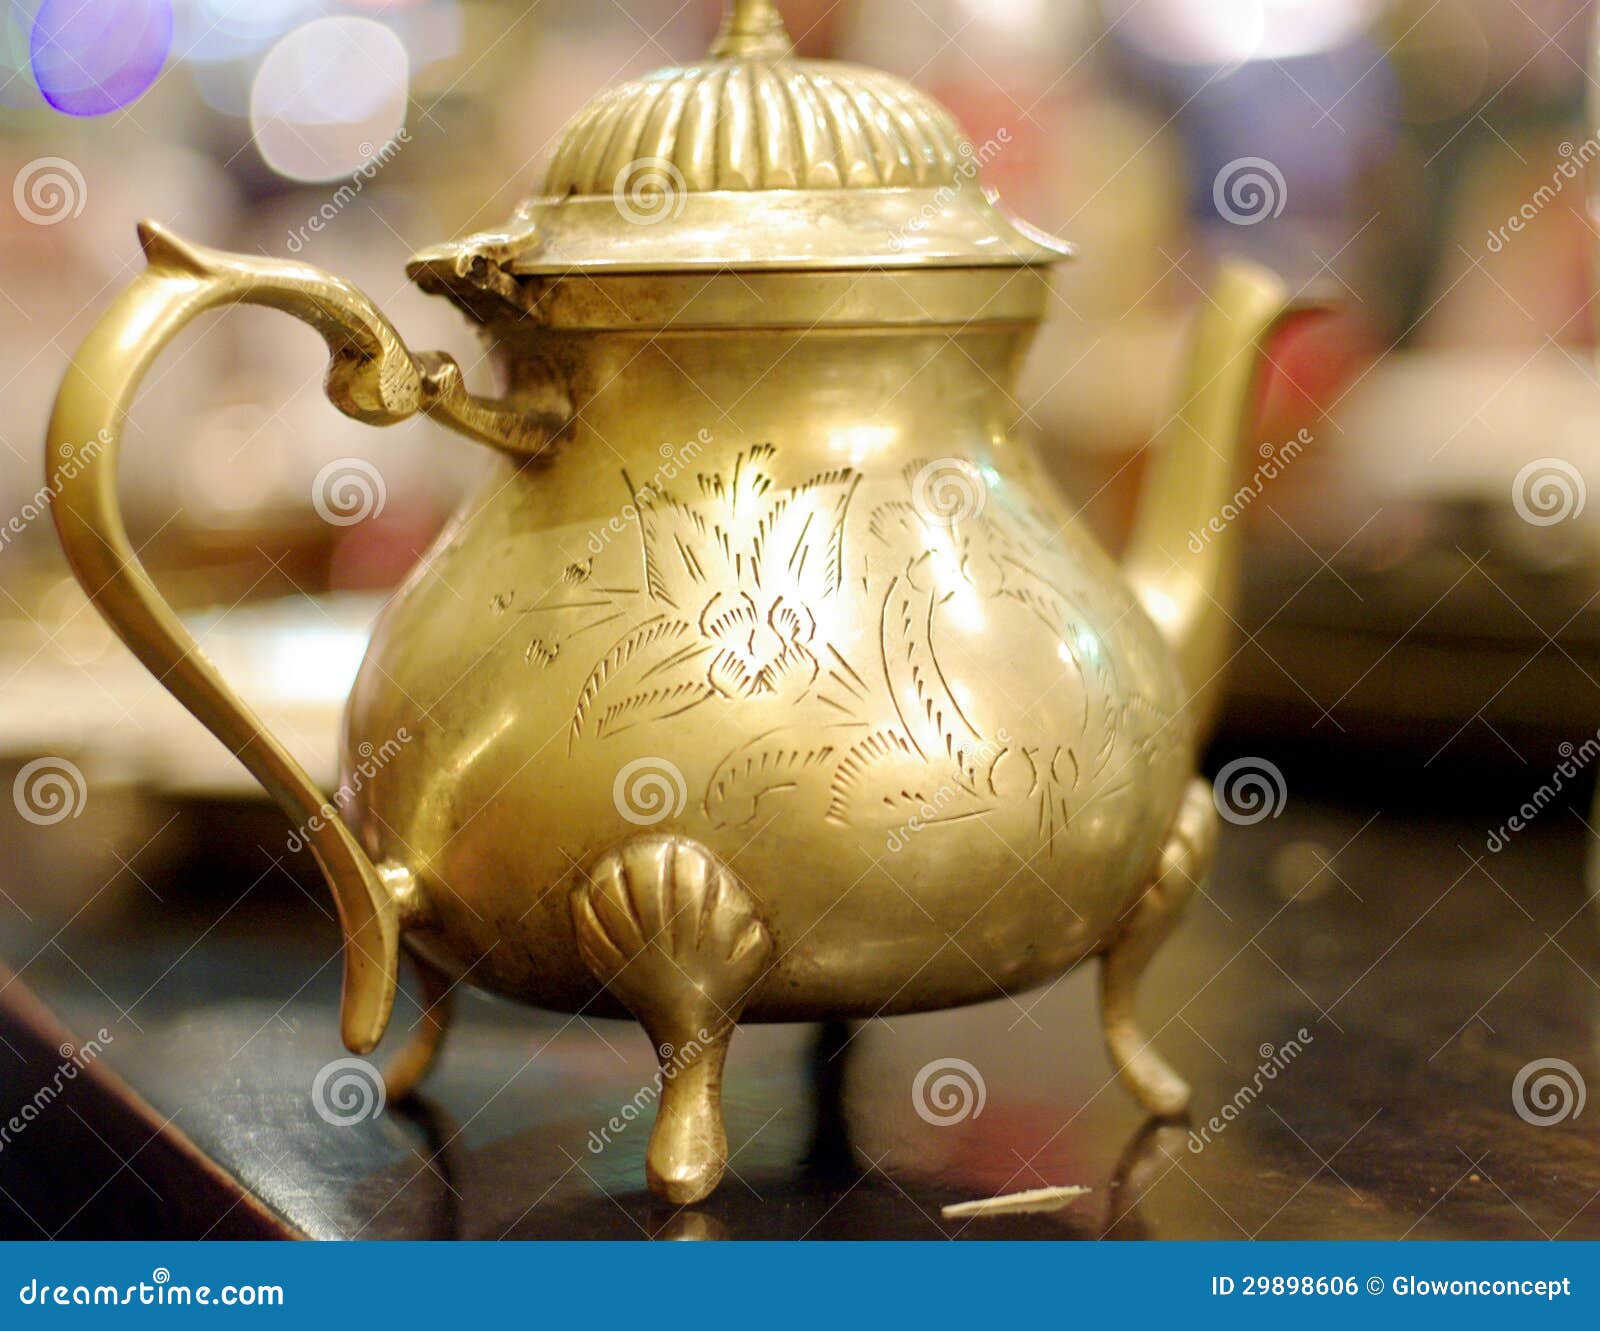 https://thumbs.dreamstime.com/z/indian-kind-hot-tea-drinks-beautiful-brass-craft-work-29898606.jpg